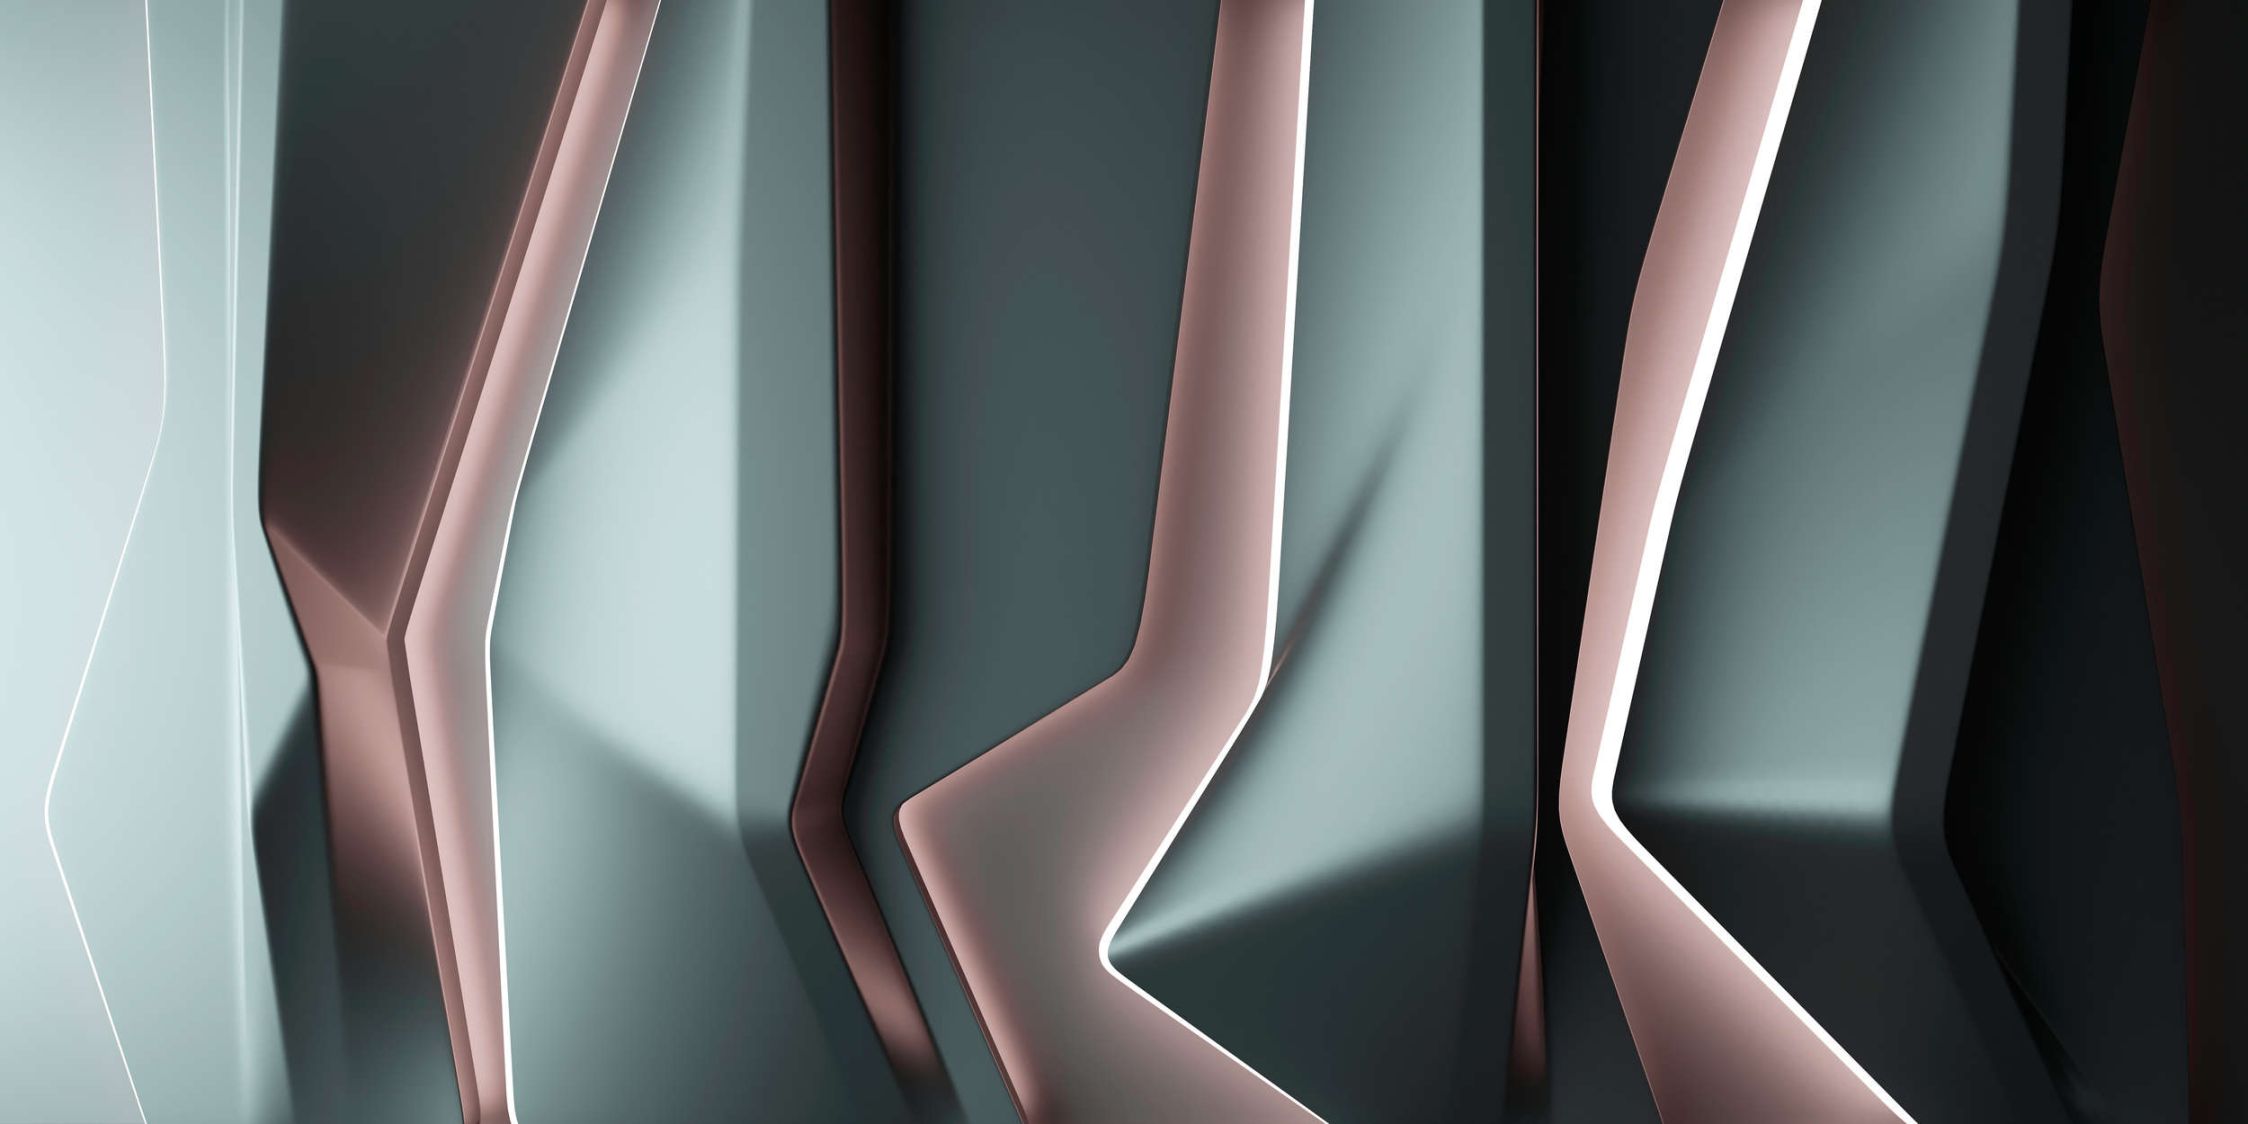             platinum 1 - Digital behang »in futuristisch lijnenspel - mat, glad vlies
        